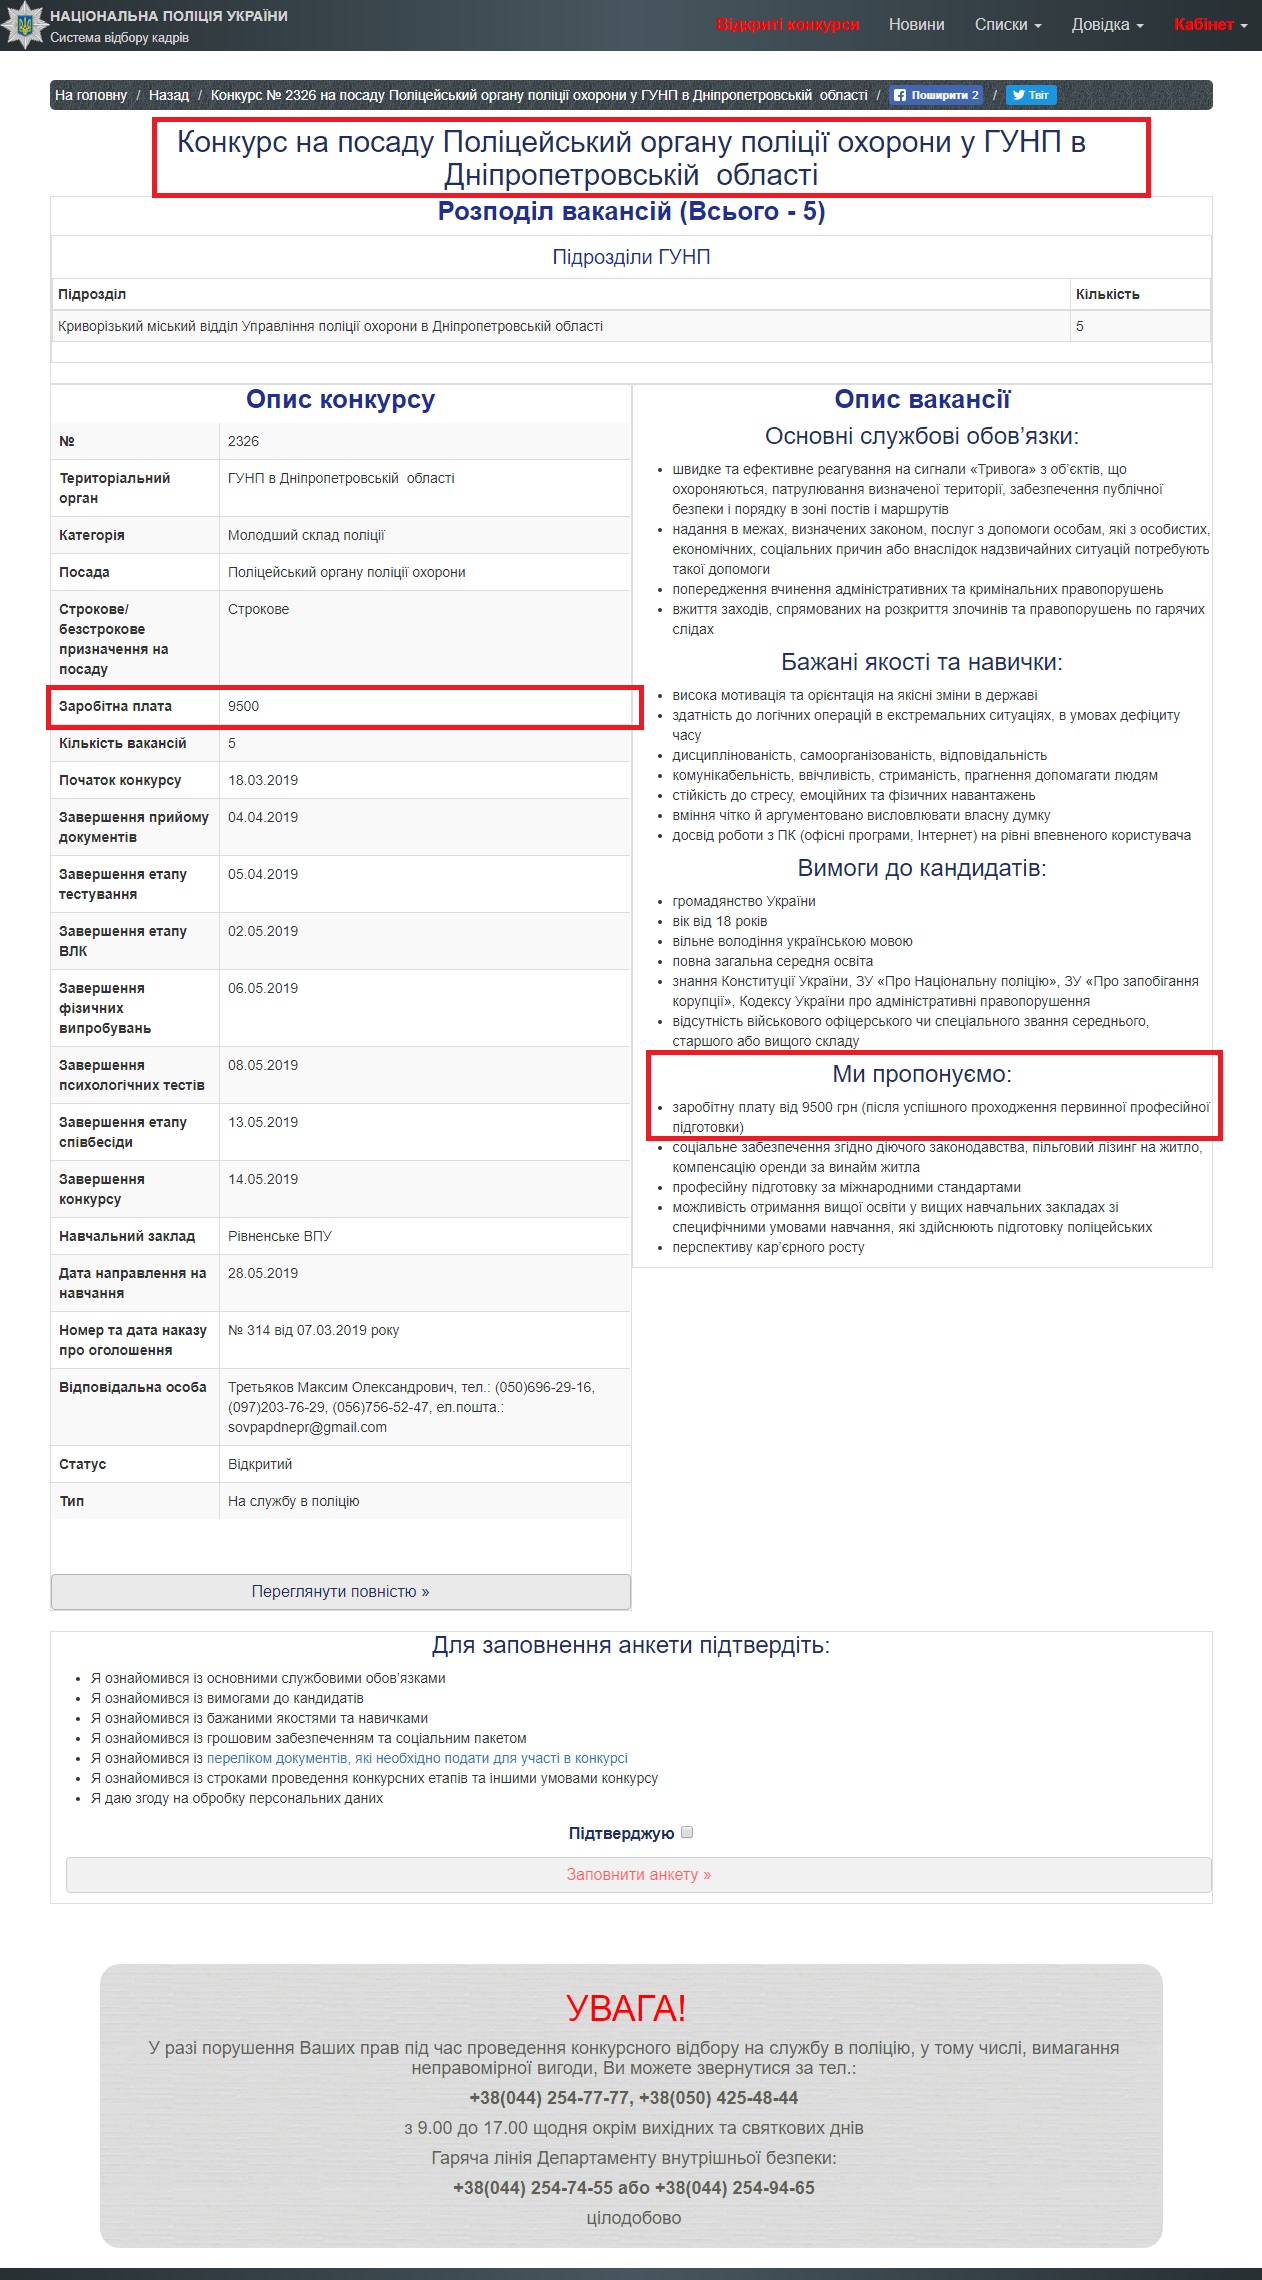 https://nabir.np.gov.ua/index.php?r=recruitment/index